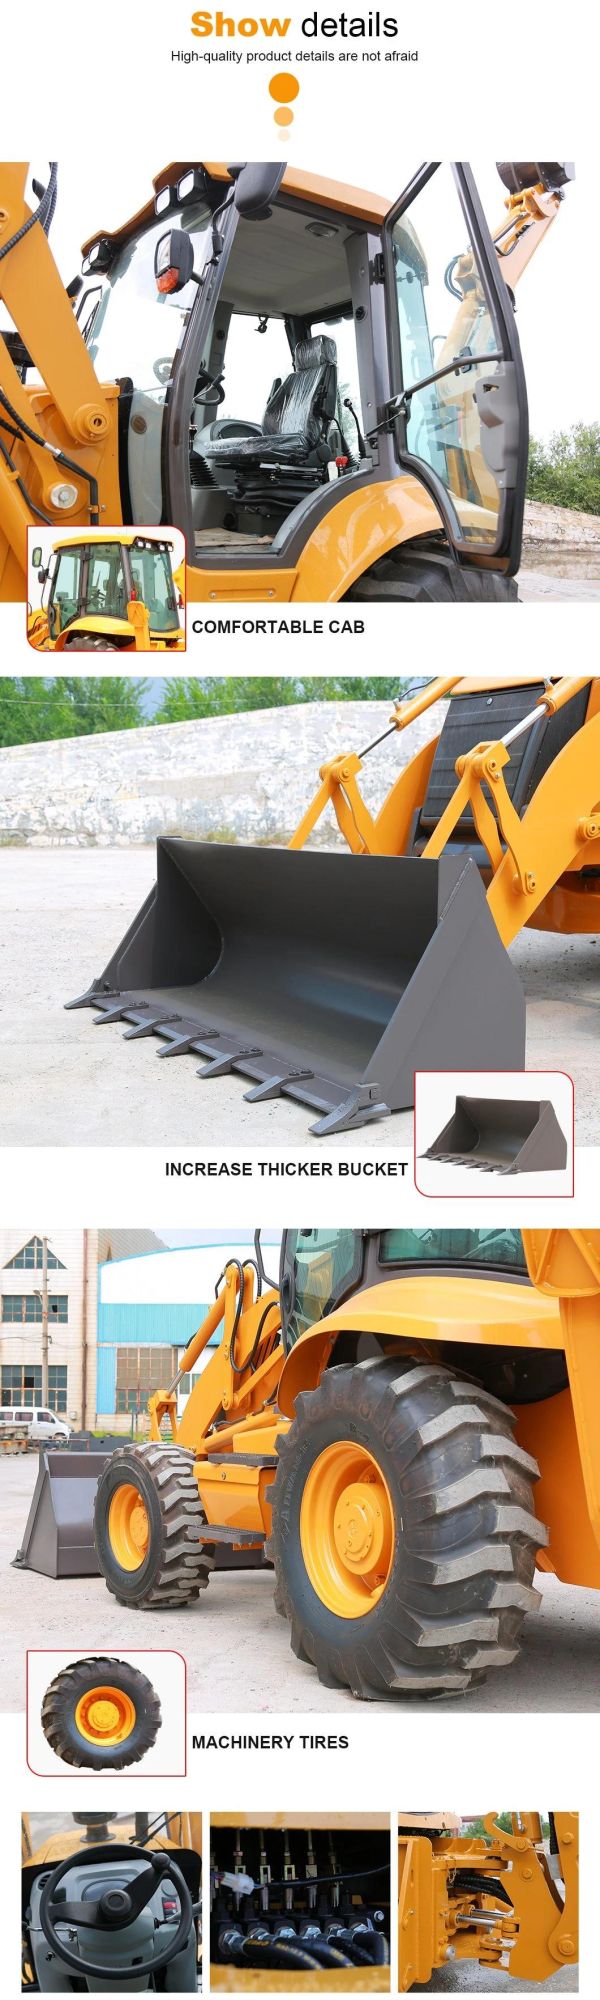 Backhoe Loader/Backhoe Loader Tractor/Backhoe Loader 4X4 Mini with Attachments for Sale